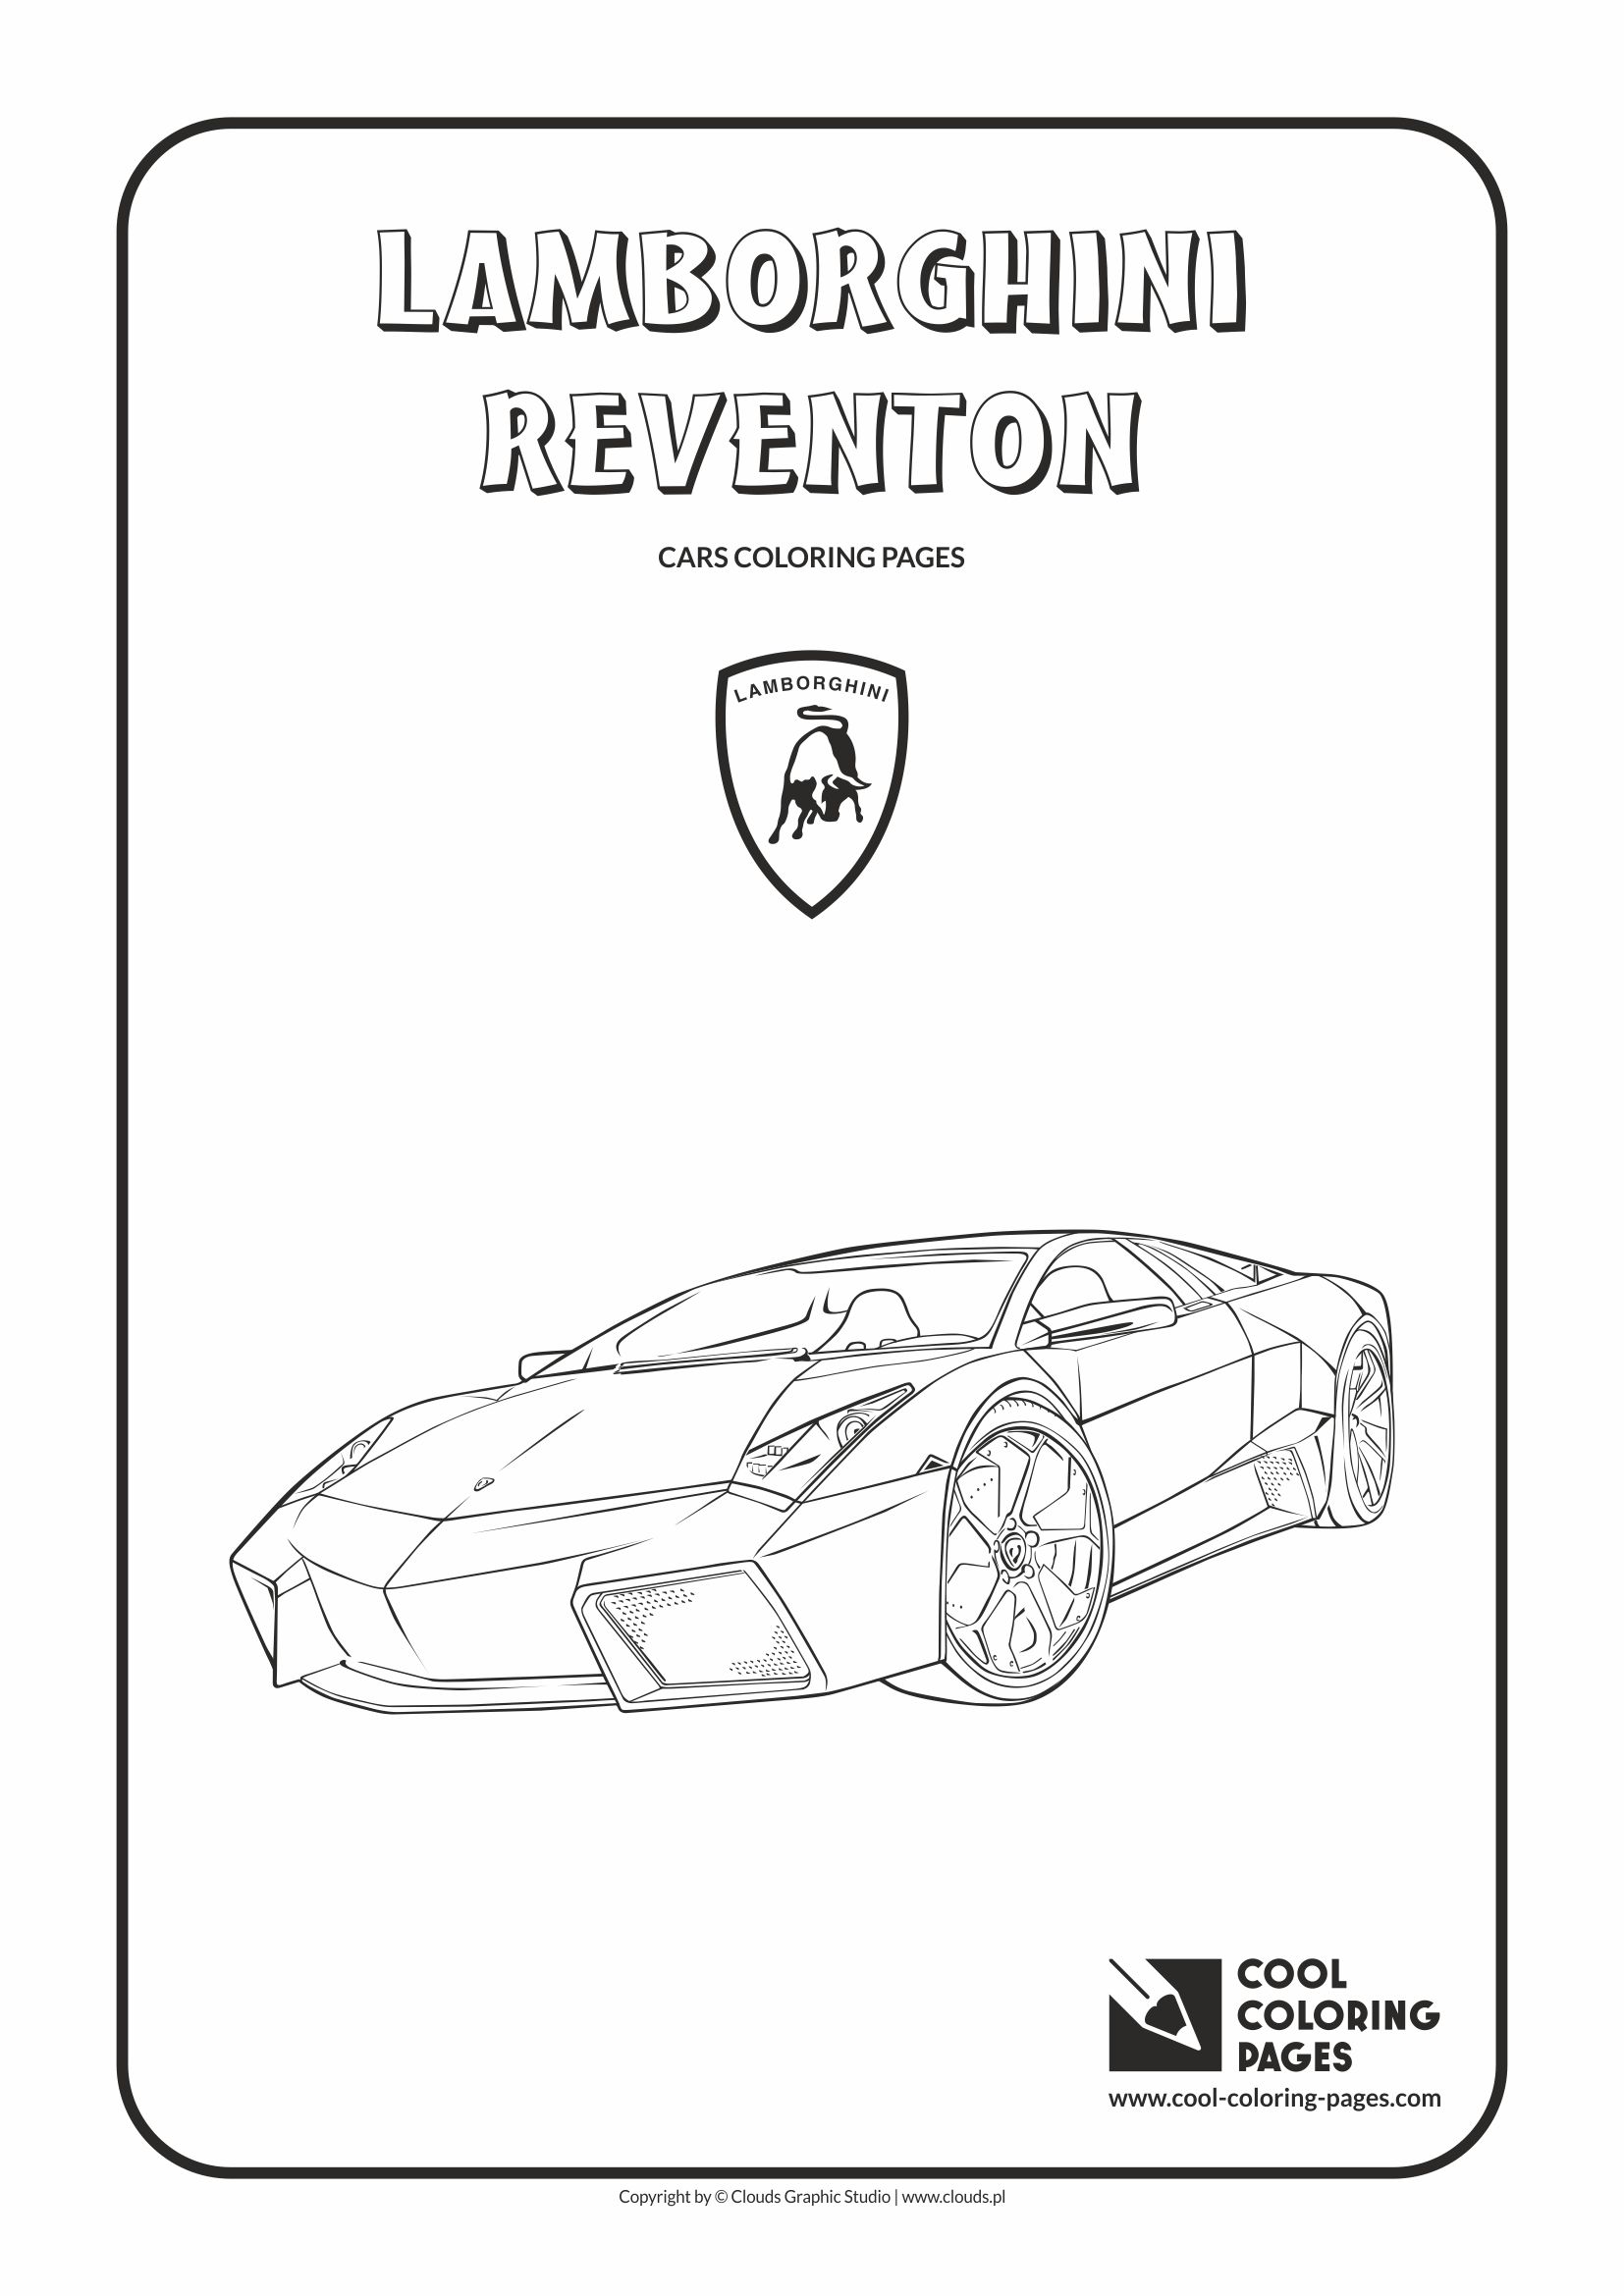 Cool Coloring Pages - Vehicles / Lamborghini Reventon / Coloring page with Lamborghini Reventon